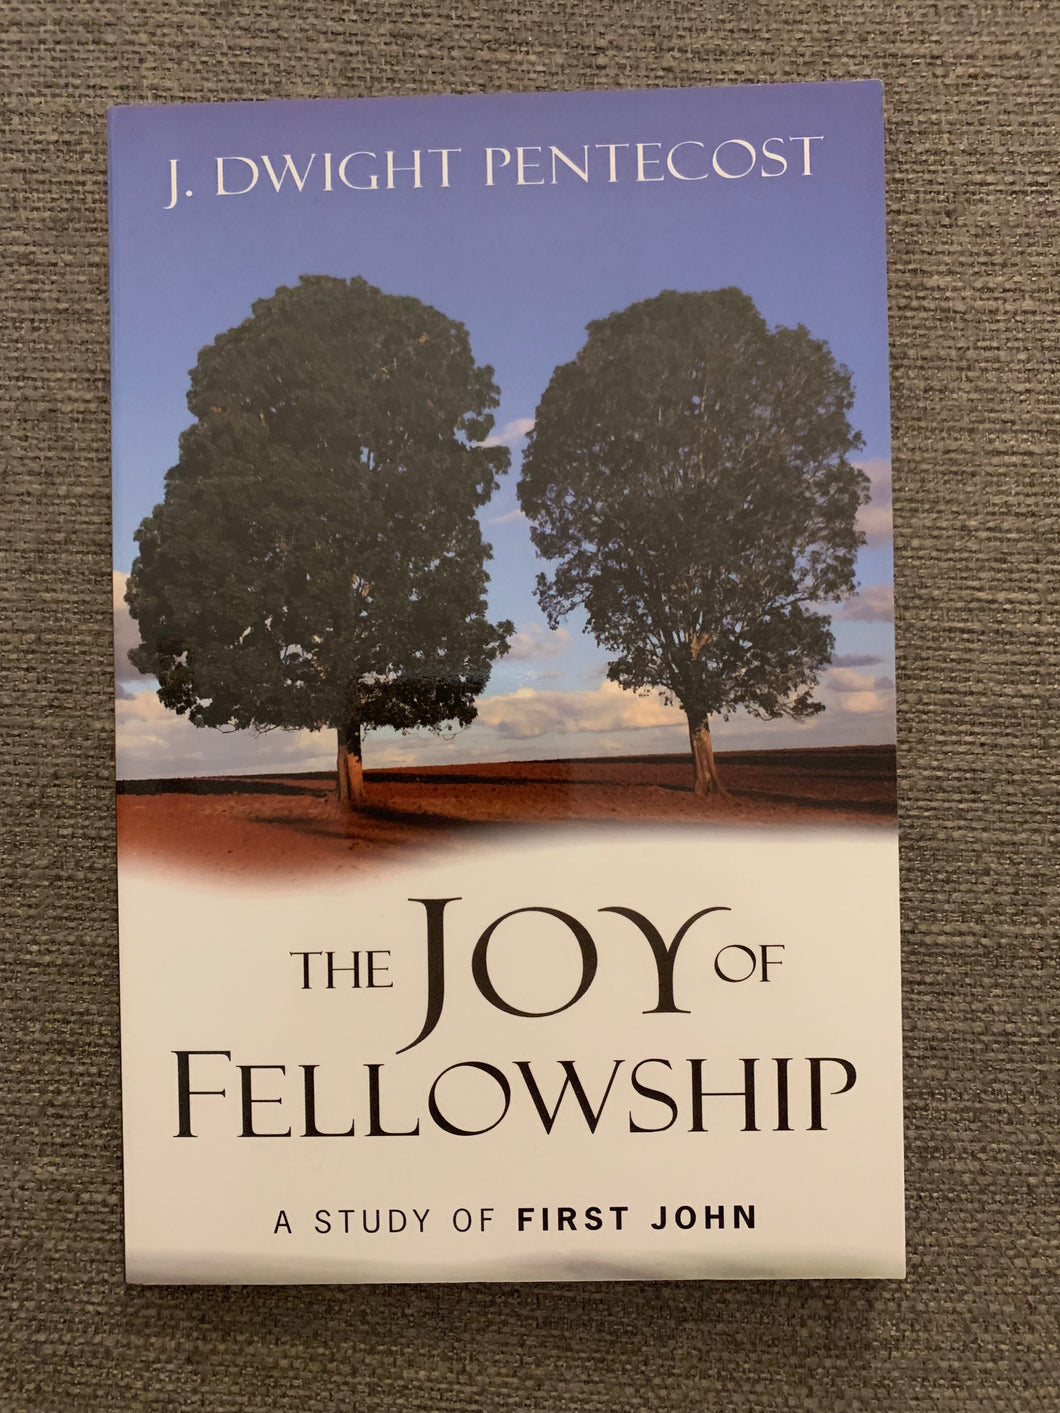 The Joy of Fellowship: A Study of First John by J. Dwight Pentecost